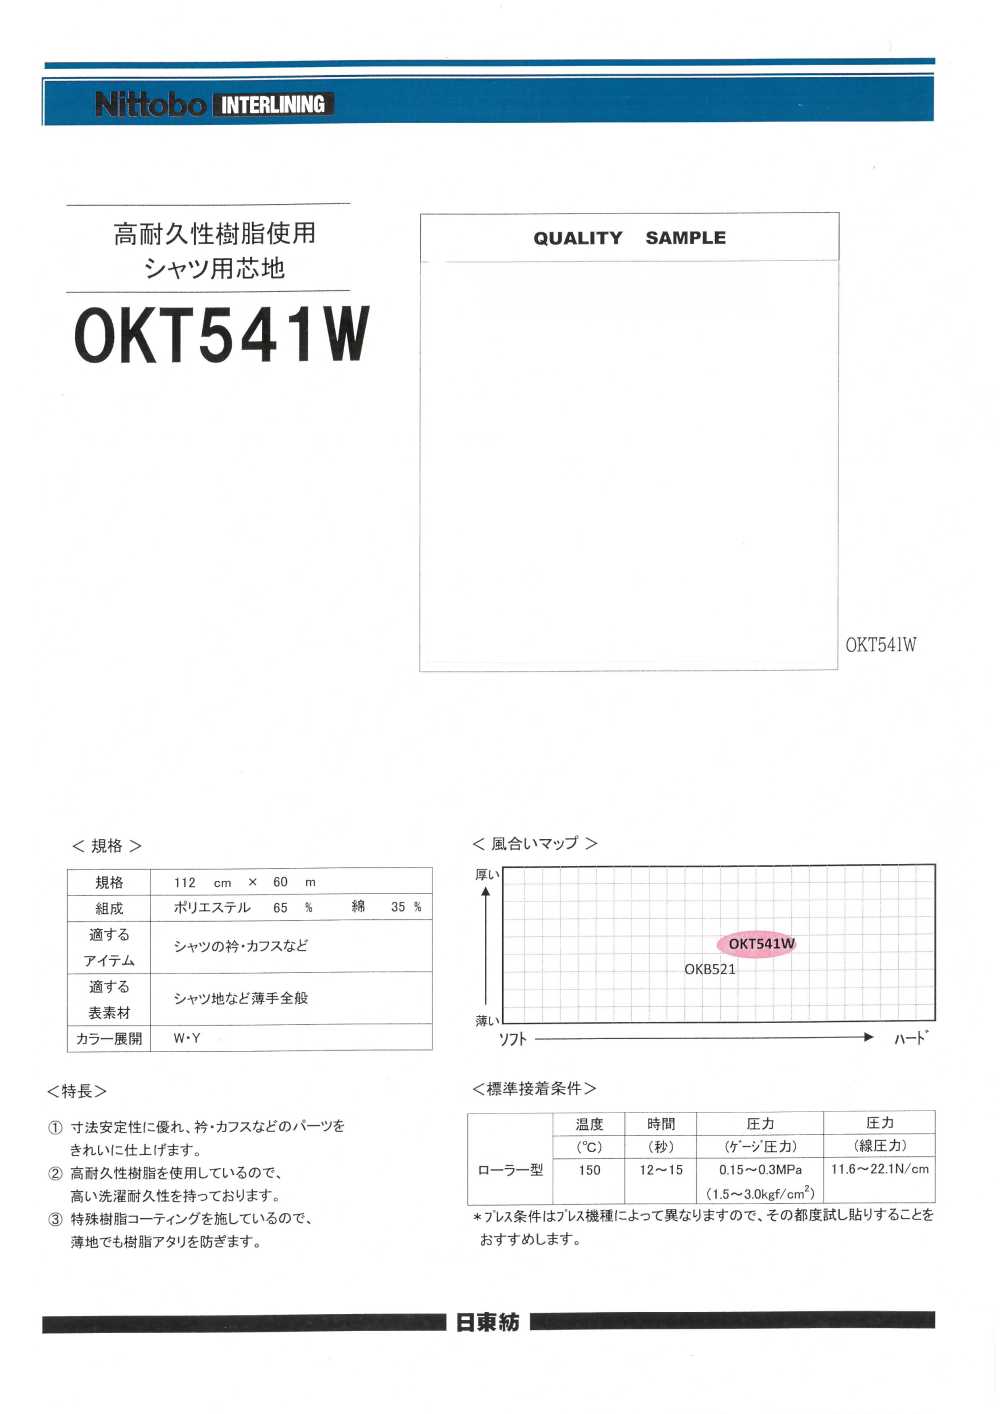 OKT541W Material De Entretela Para Camisas Feitas De Resina De Alta Durabilidade[Entrelinha] Nittobo